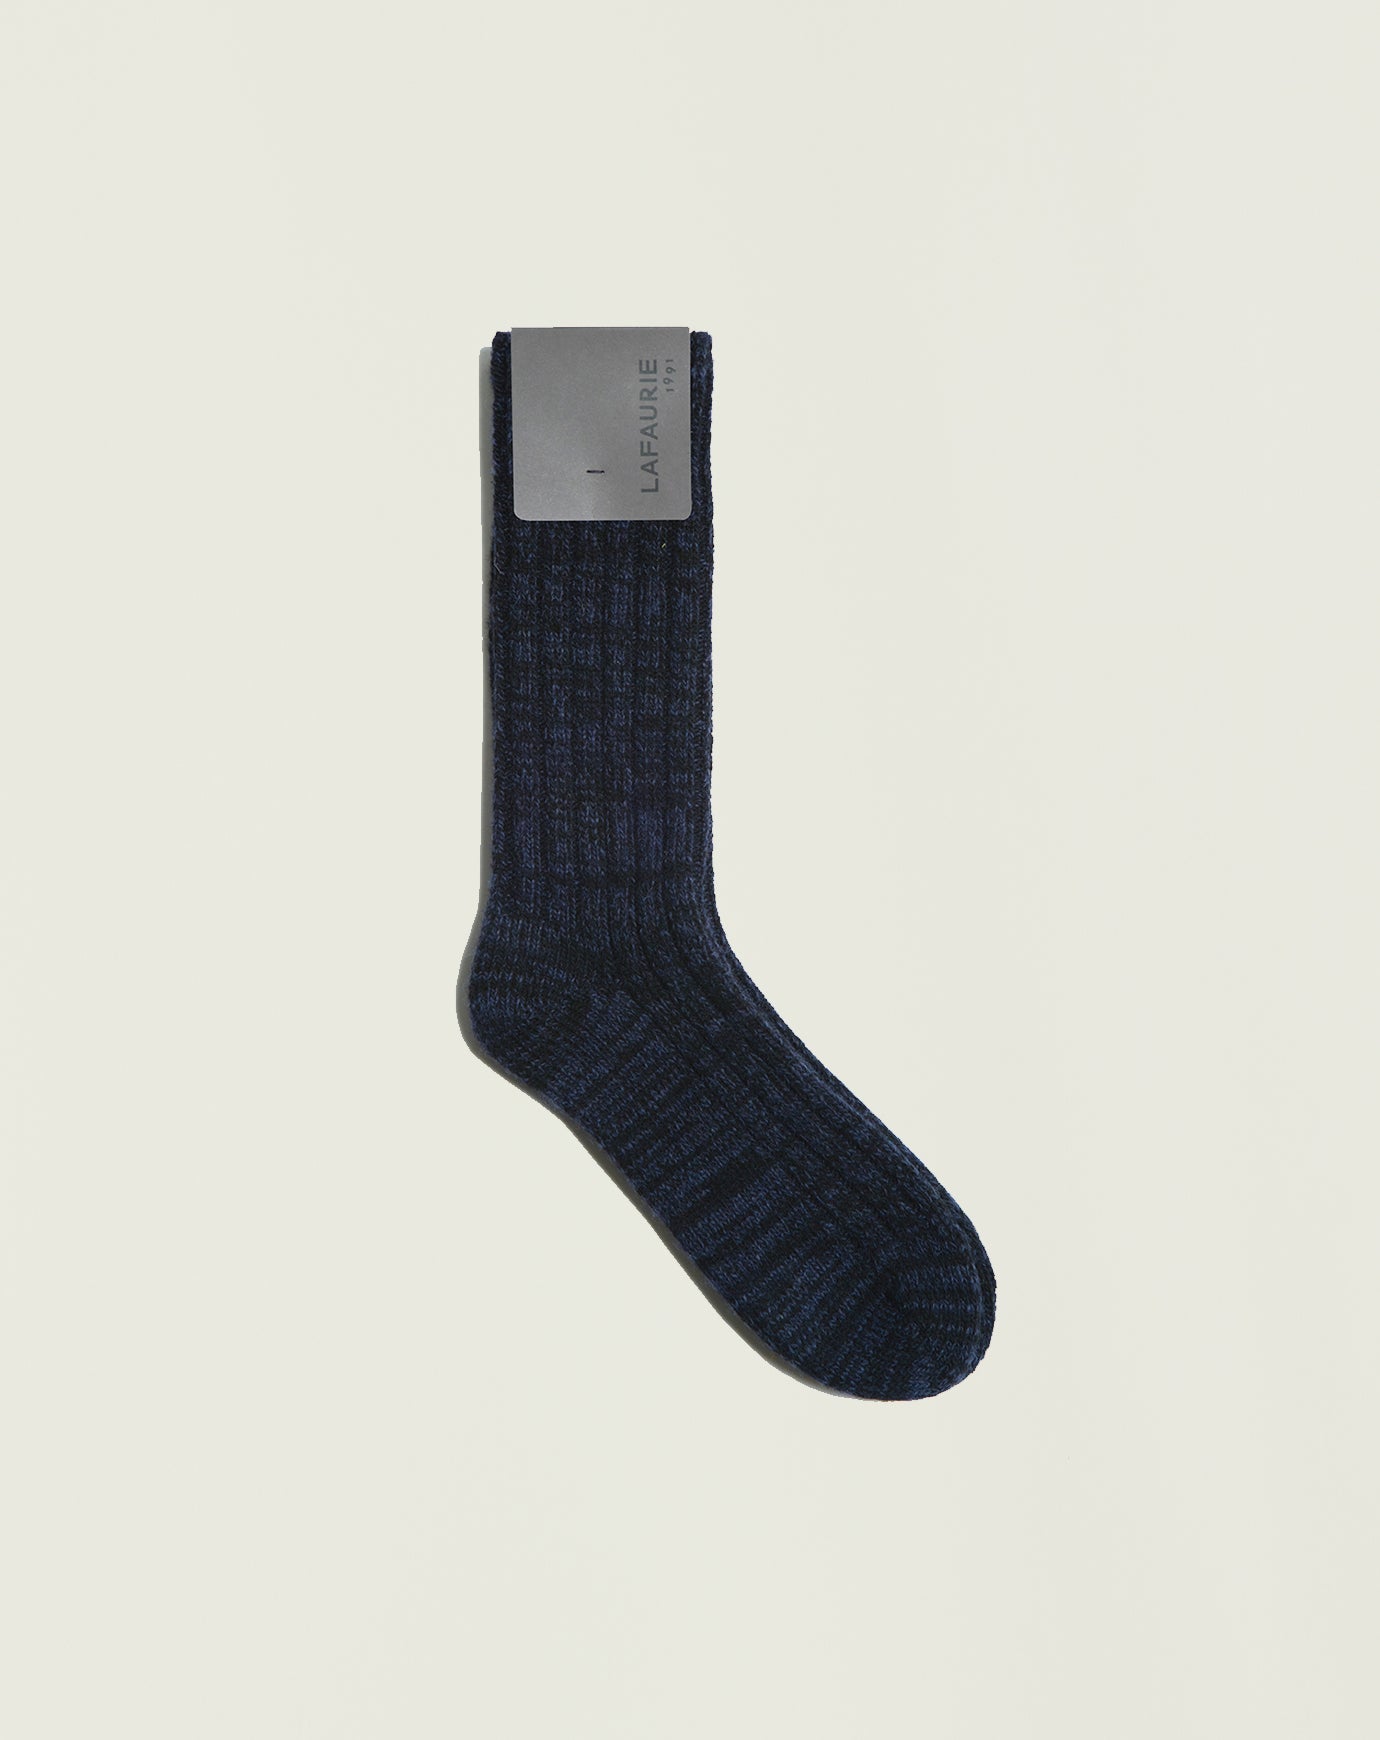 CLAIRO Socks - Black/Navy